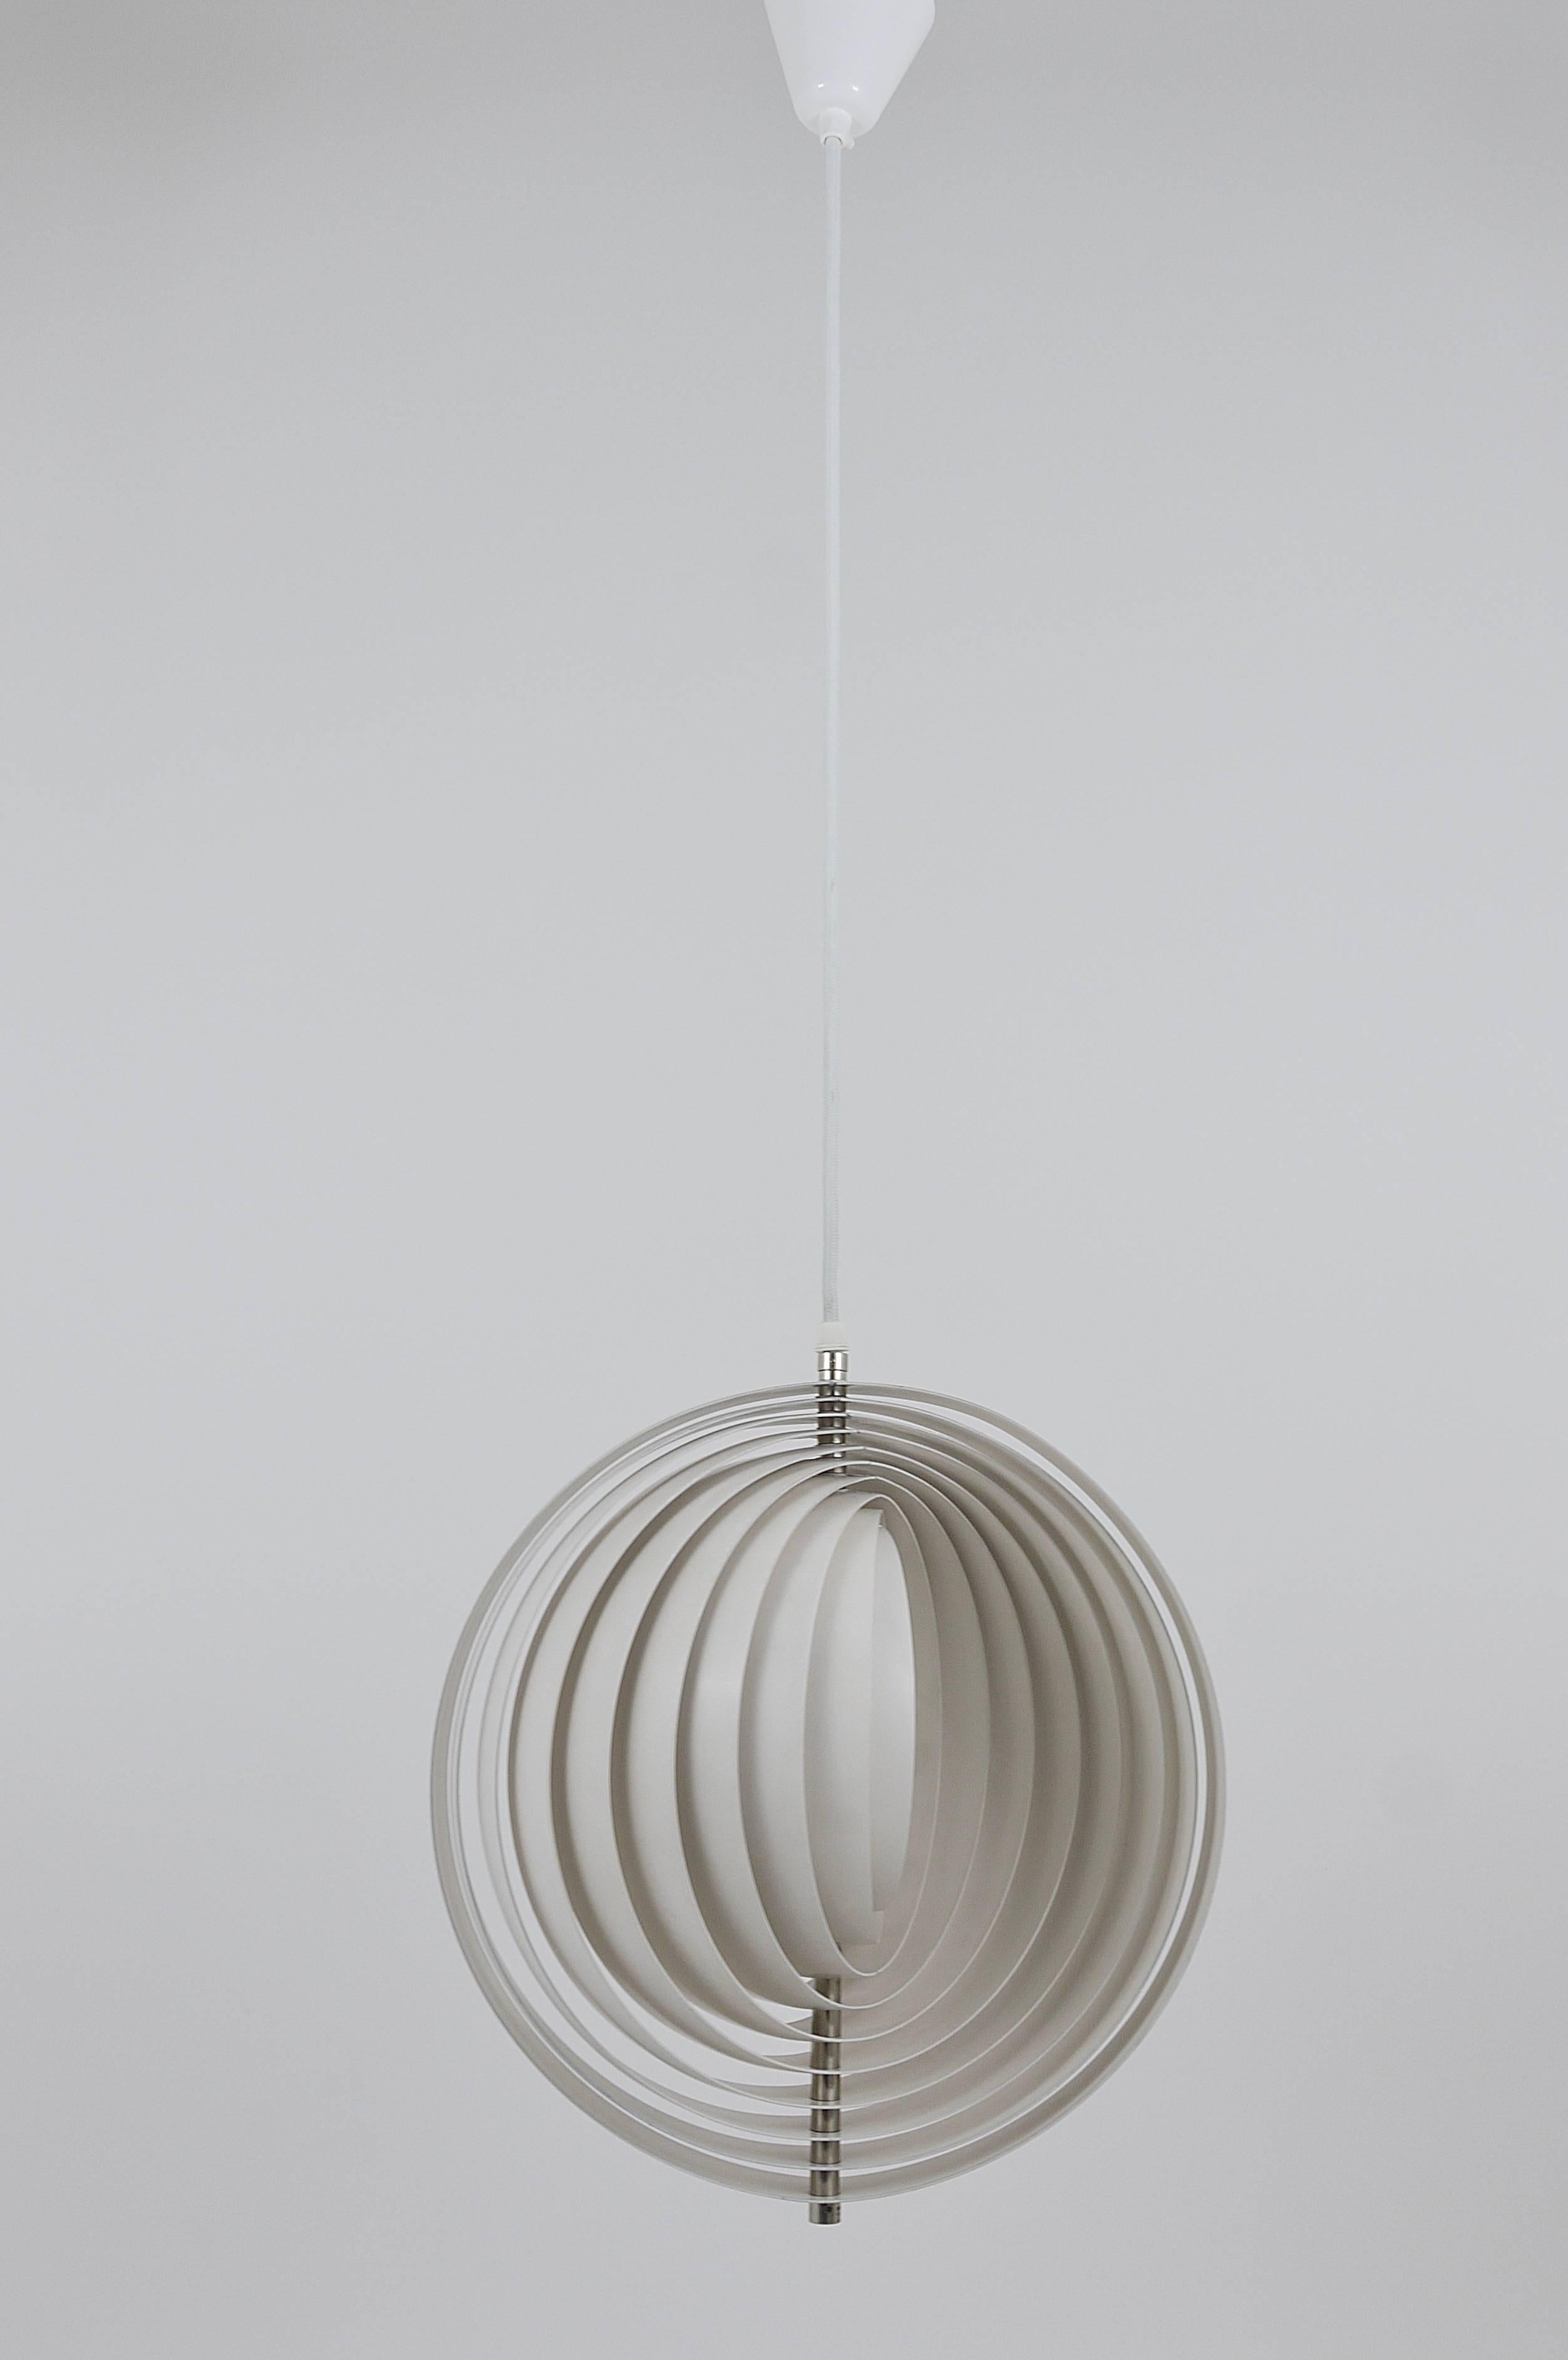 Weiße Verner Panton Op-Art Mondlampe Visor-Lampe, Louis Poulsen, Dänemark, 1960er Jahre (Dänisch) im Angebot